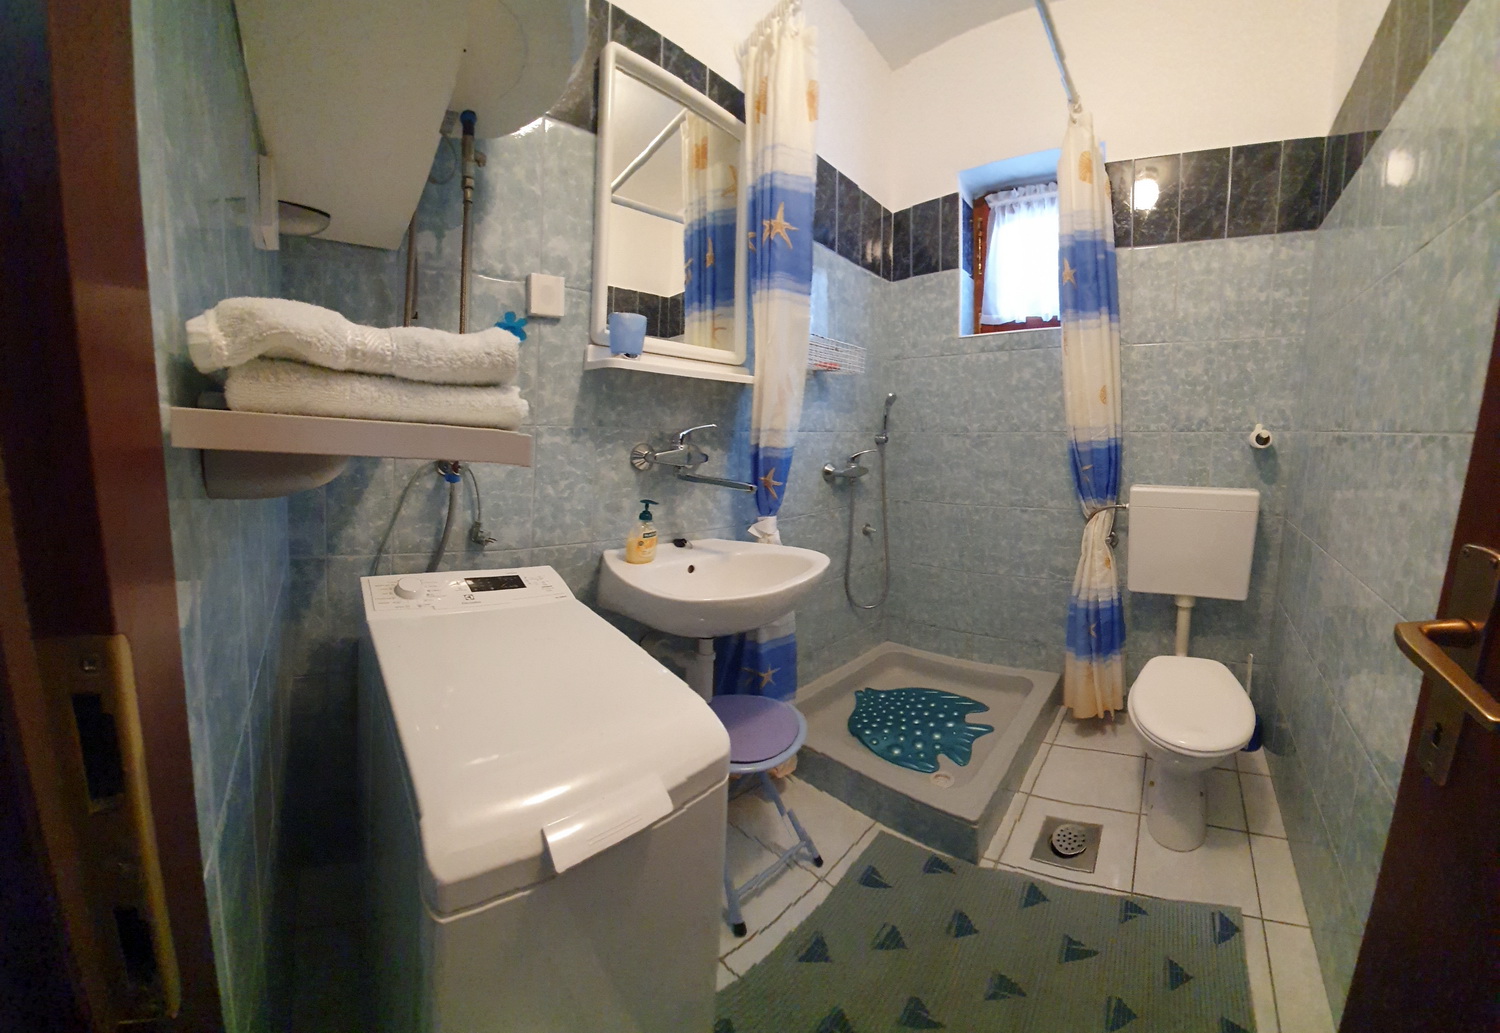 Ap.2 bathroom